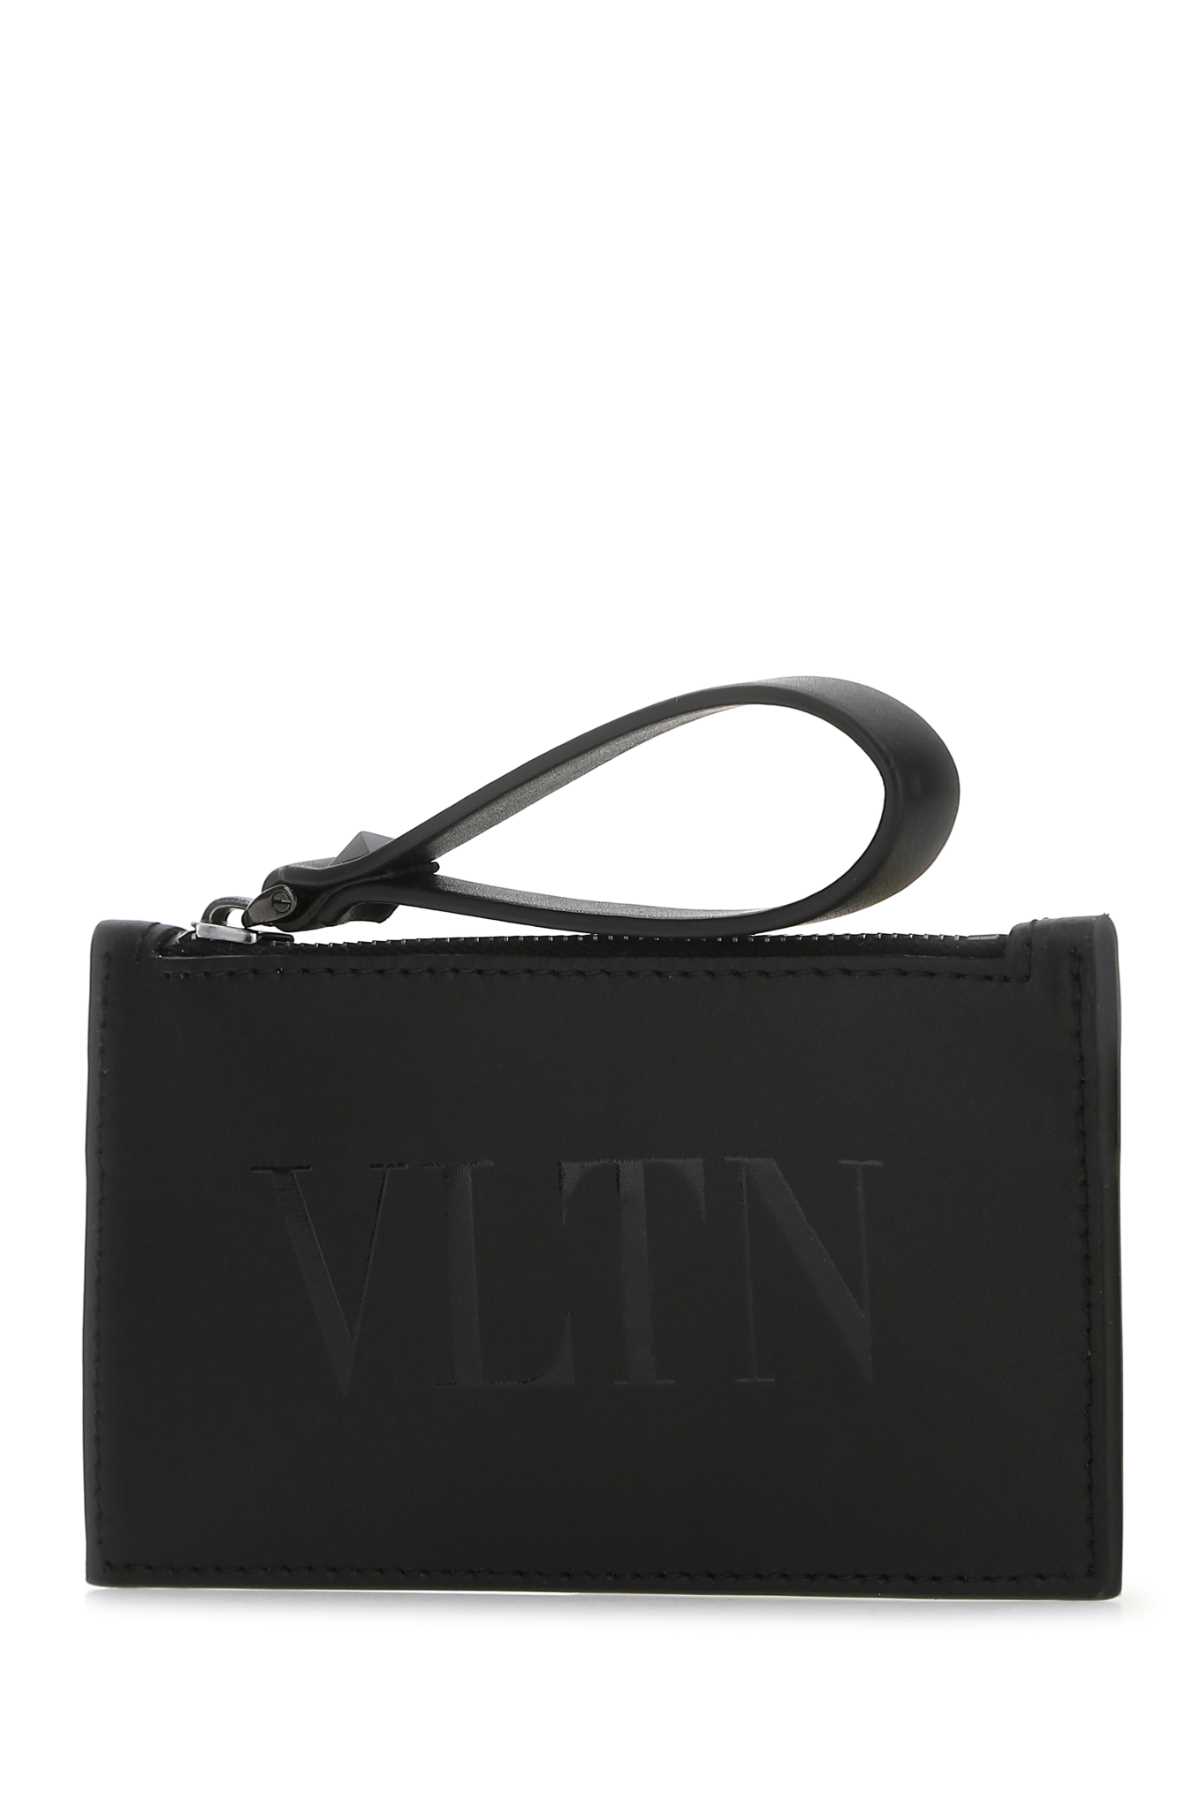 Shop Valentino Black Leather Card Holder In Nero